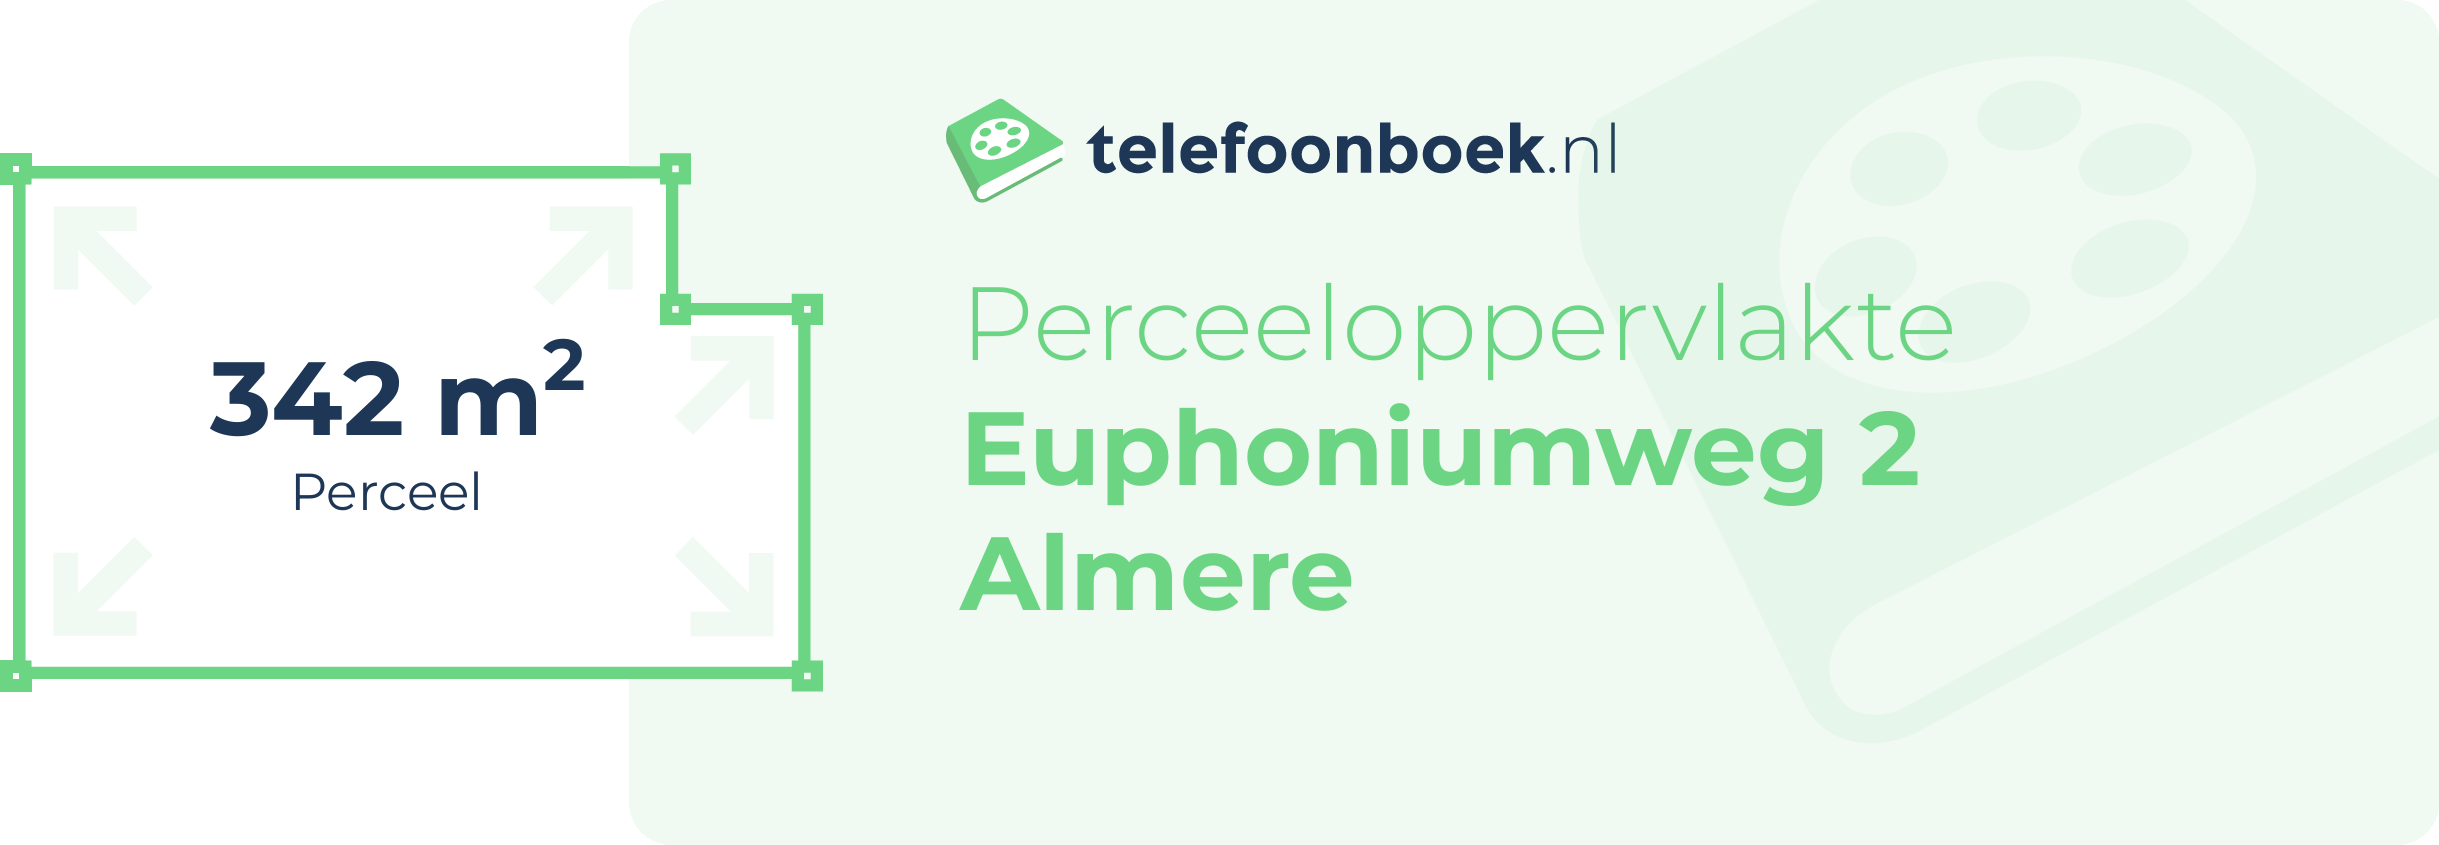 Perceeloppervlakte Euphoniumweg 2 Almere